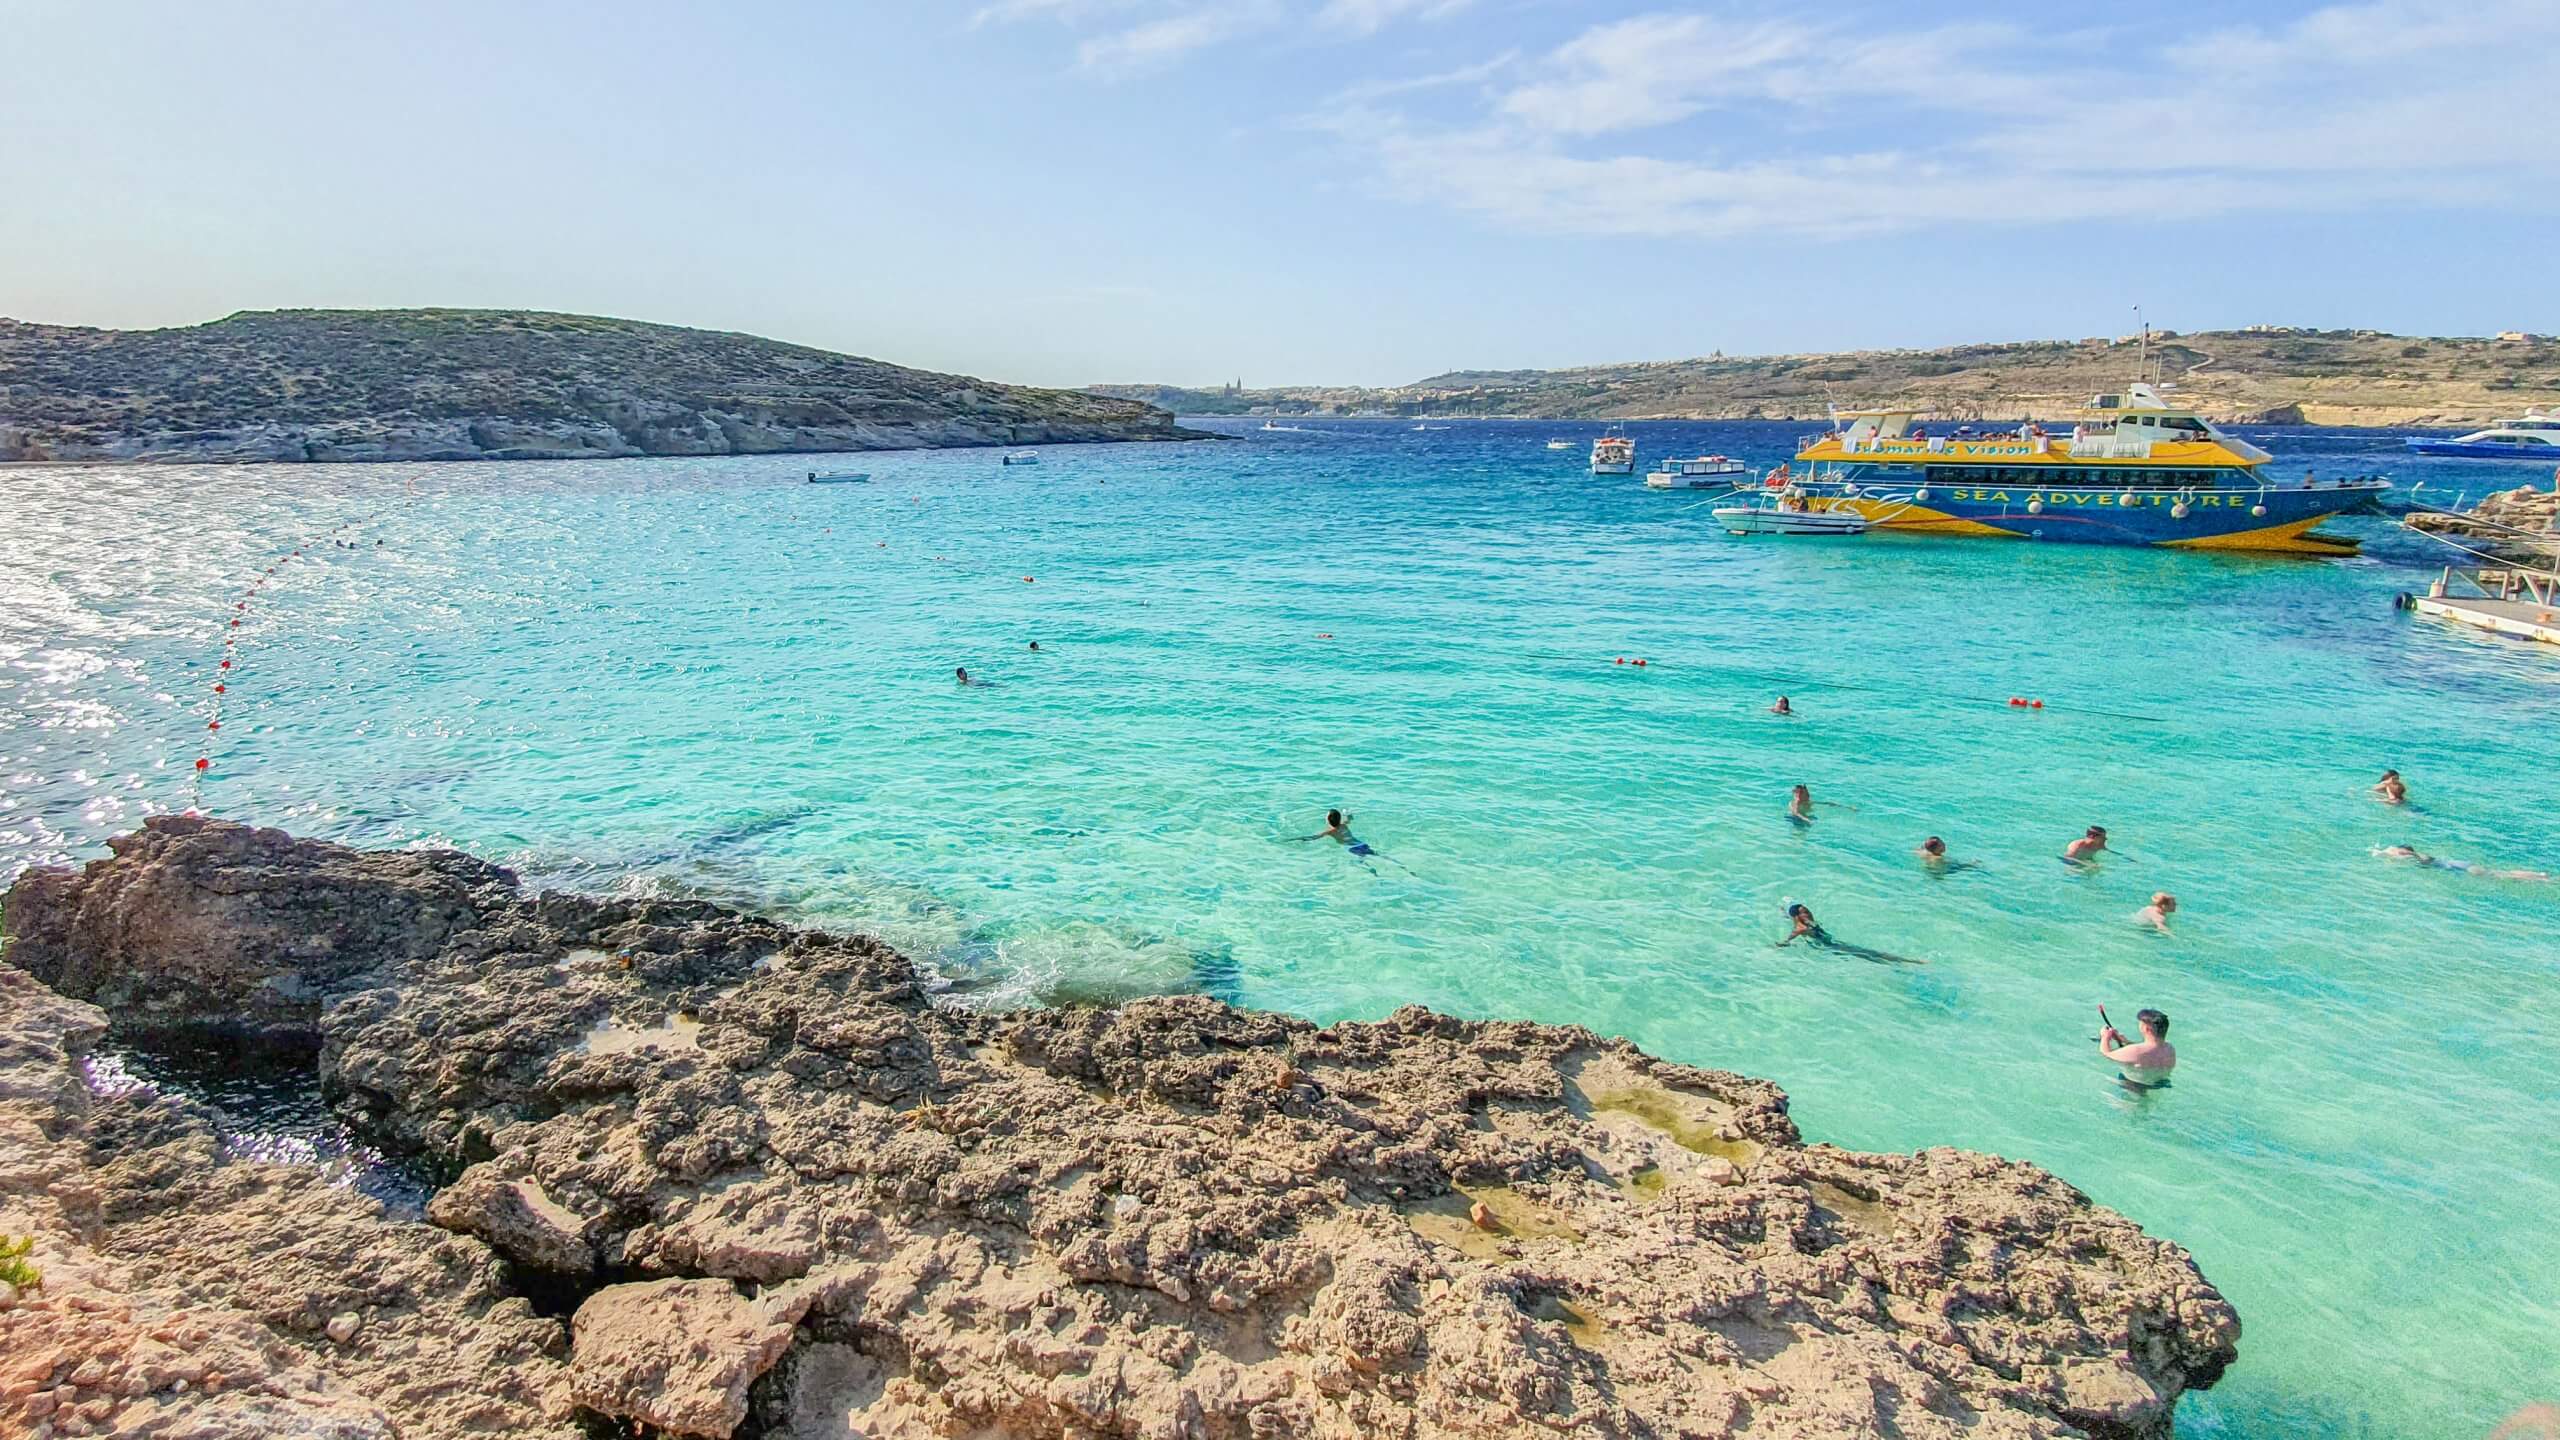 https://theyogiwanderer.com/wp-content/uploads/2020/02/Comino-Malta-Blue-Lagoon-18-scaled.jpg